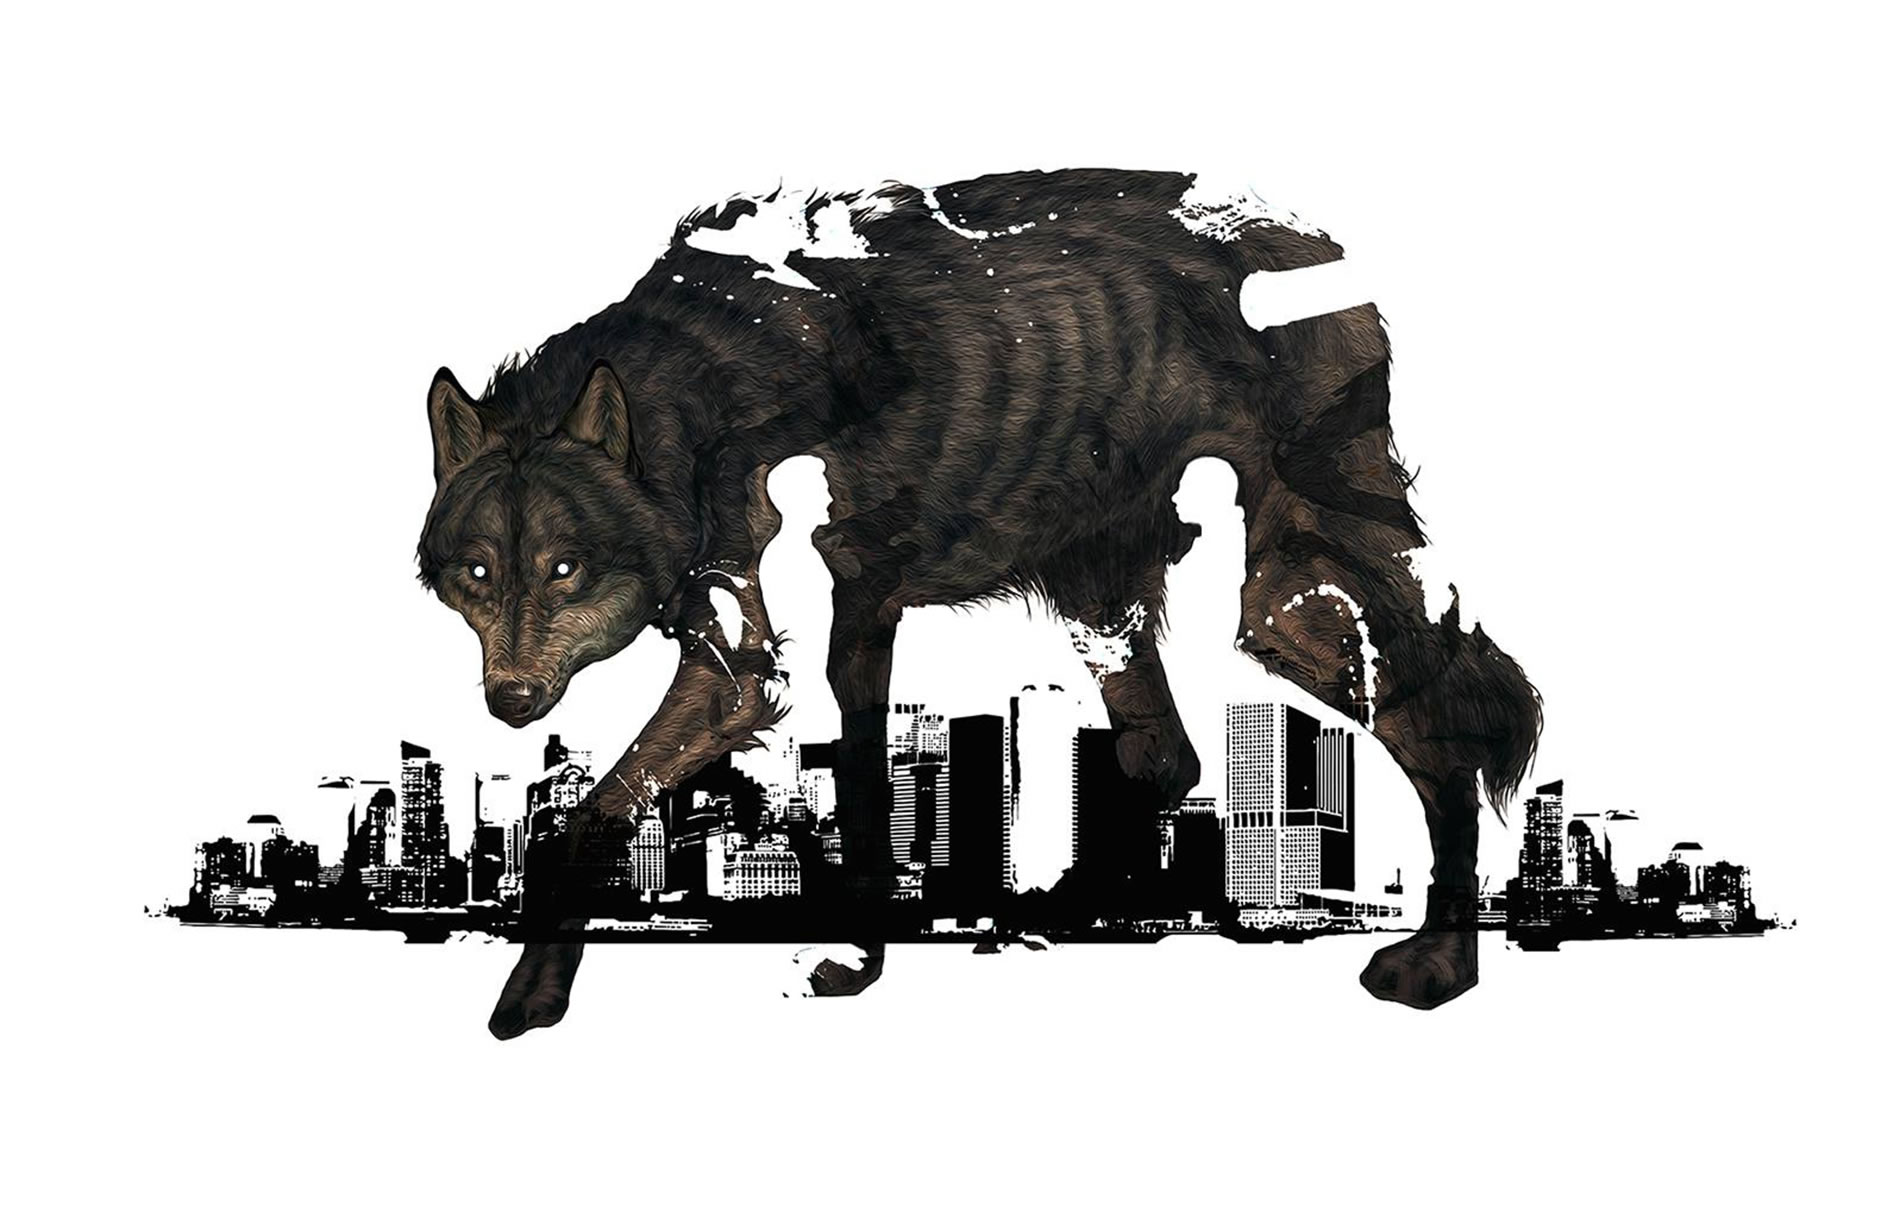 Steppenwolf, optical illusion, by aj frenzy